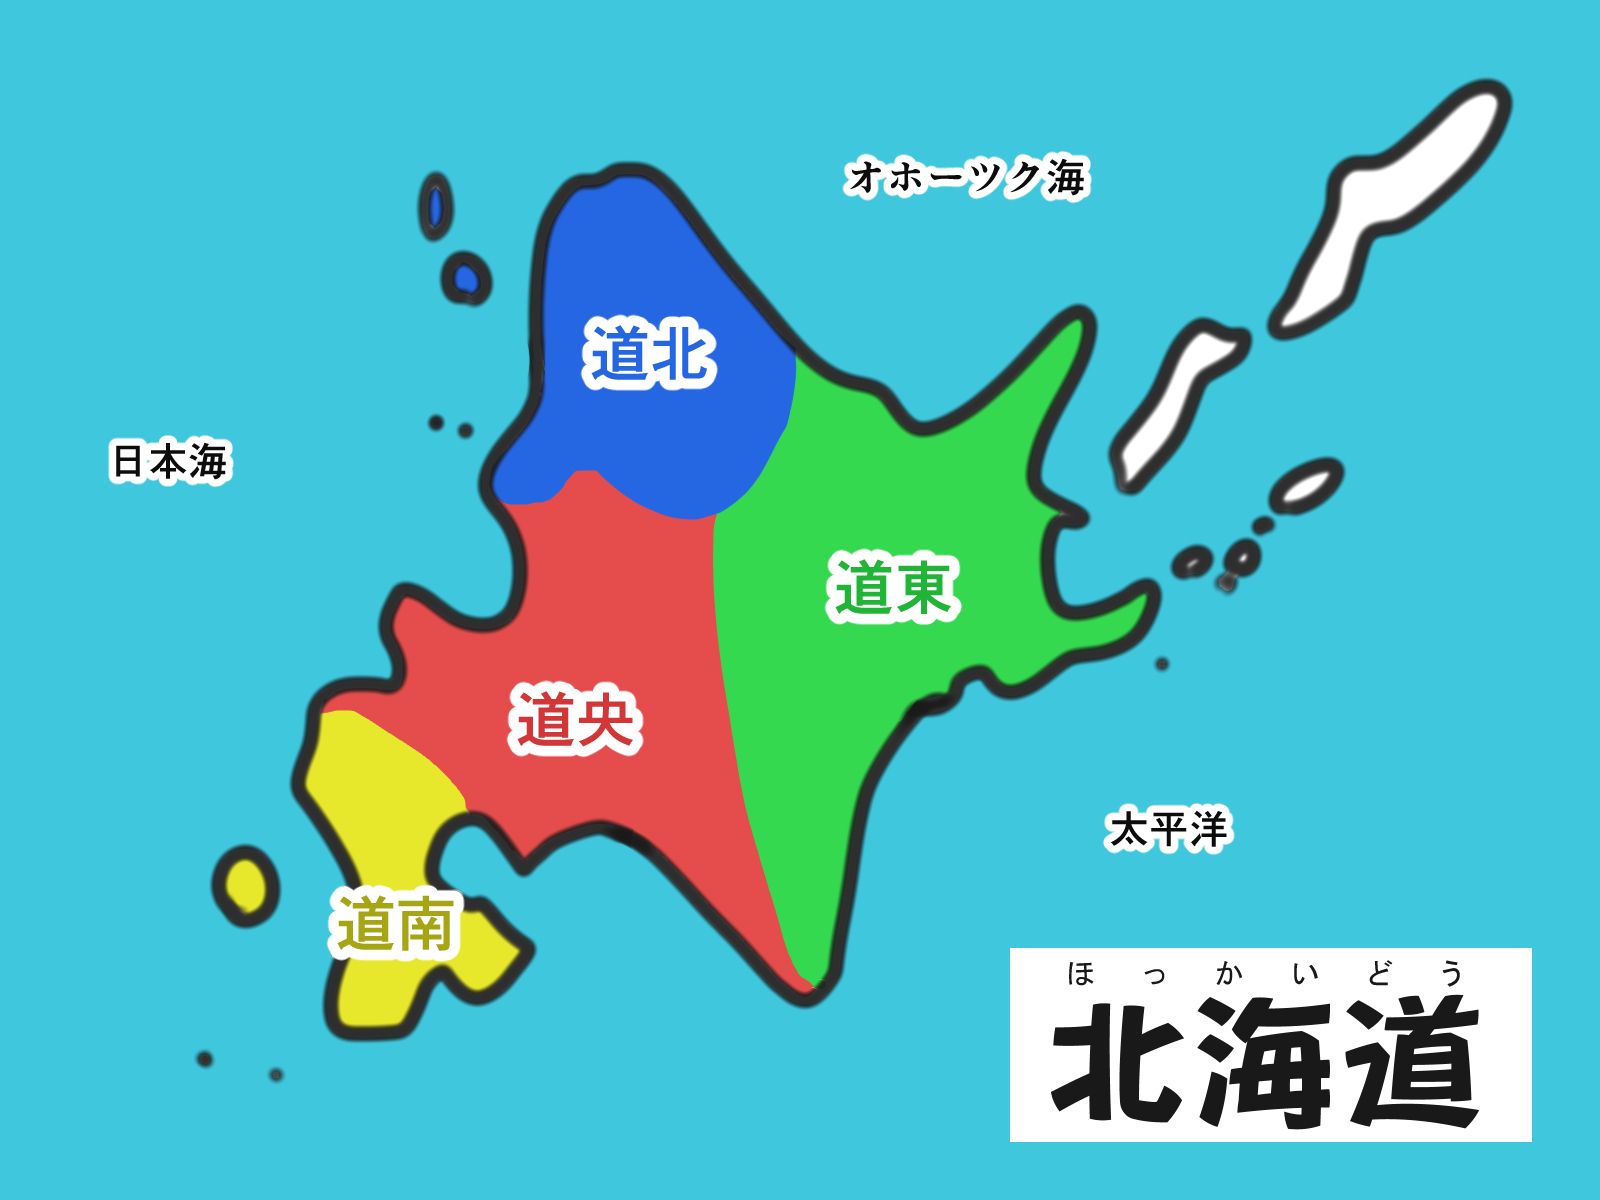 Hokkaido Central Hokkaido Southern Hokkaido Eastern Hokkaido moral area division map